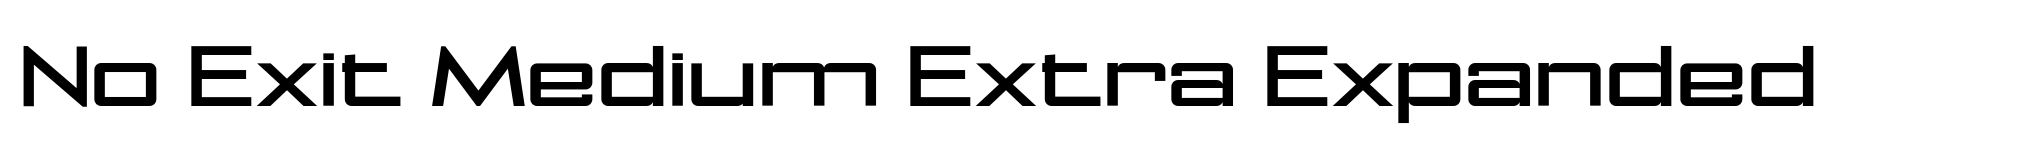 No Exit Medium Extra Expanded image